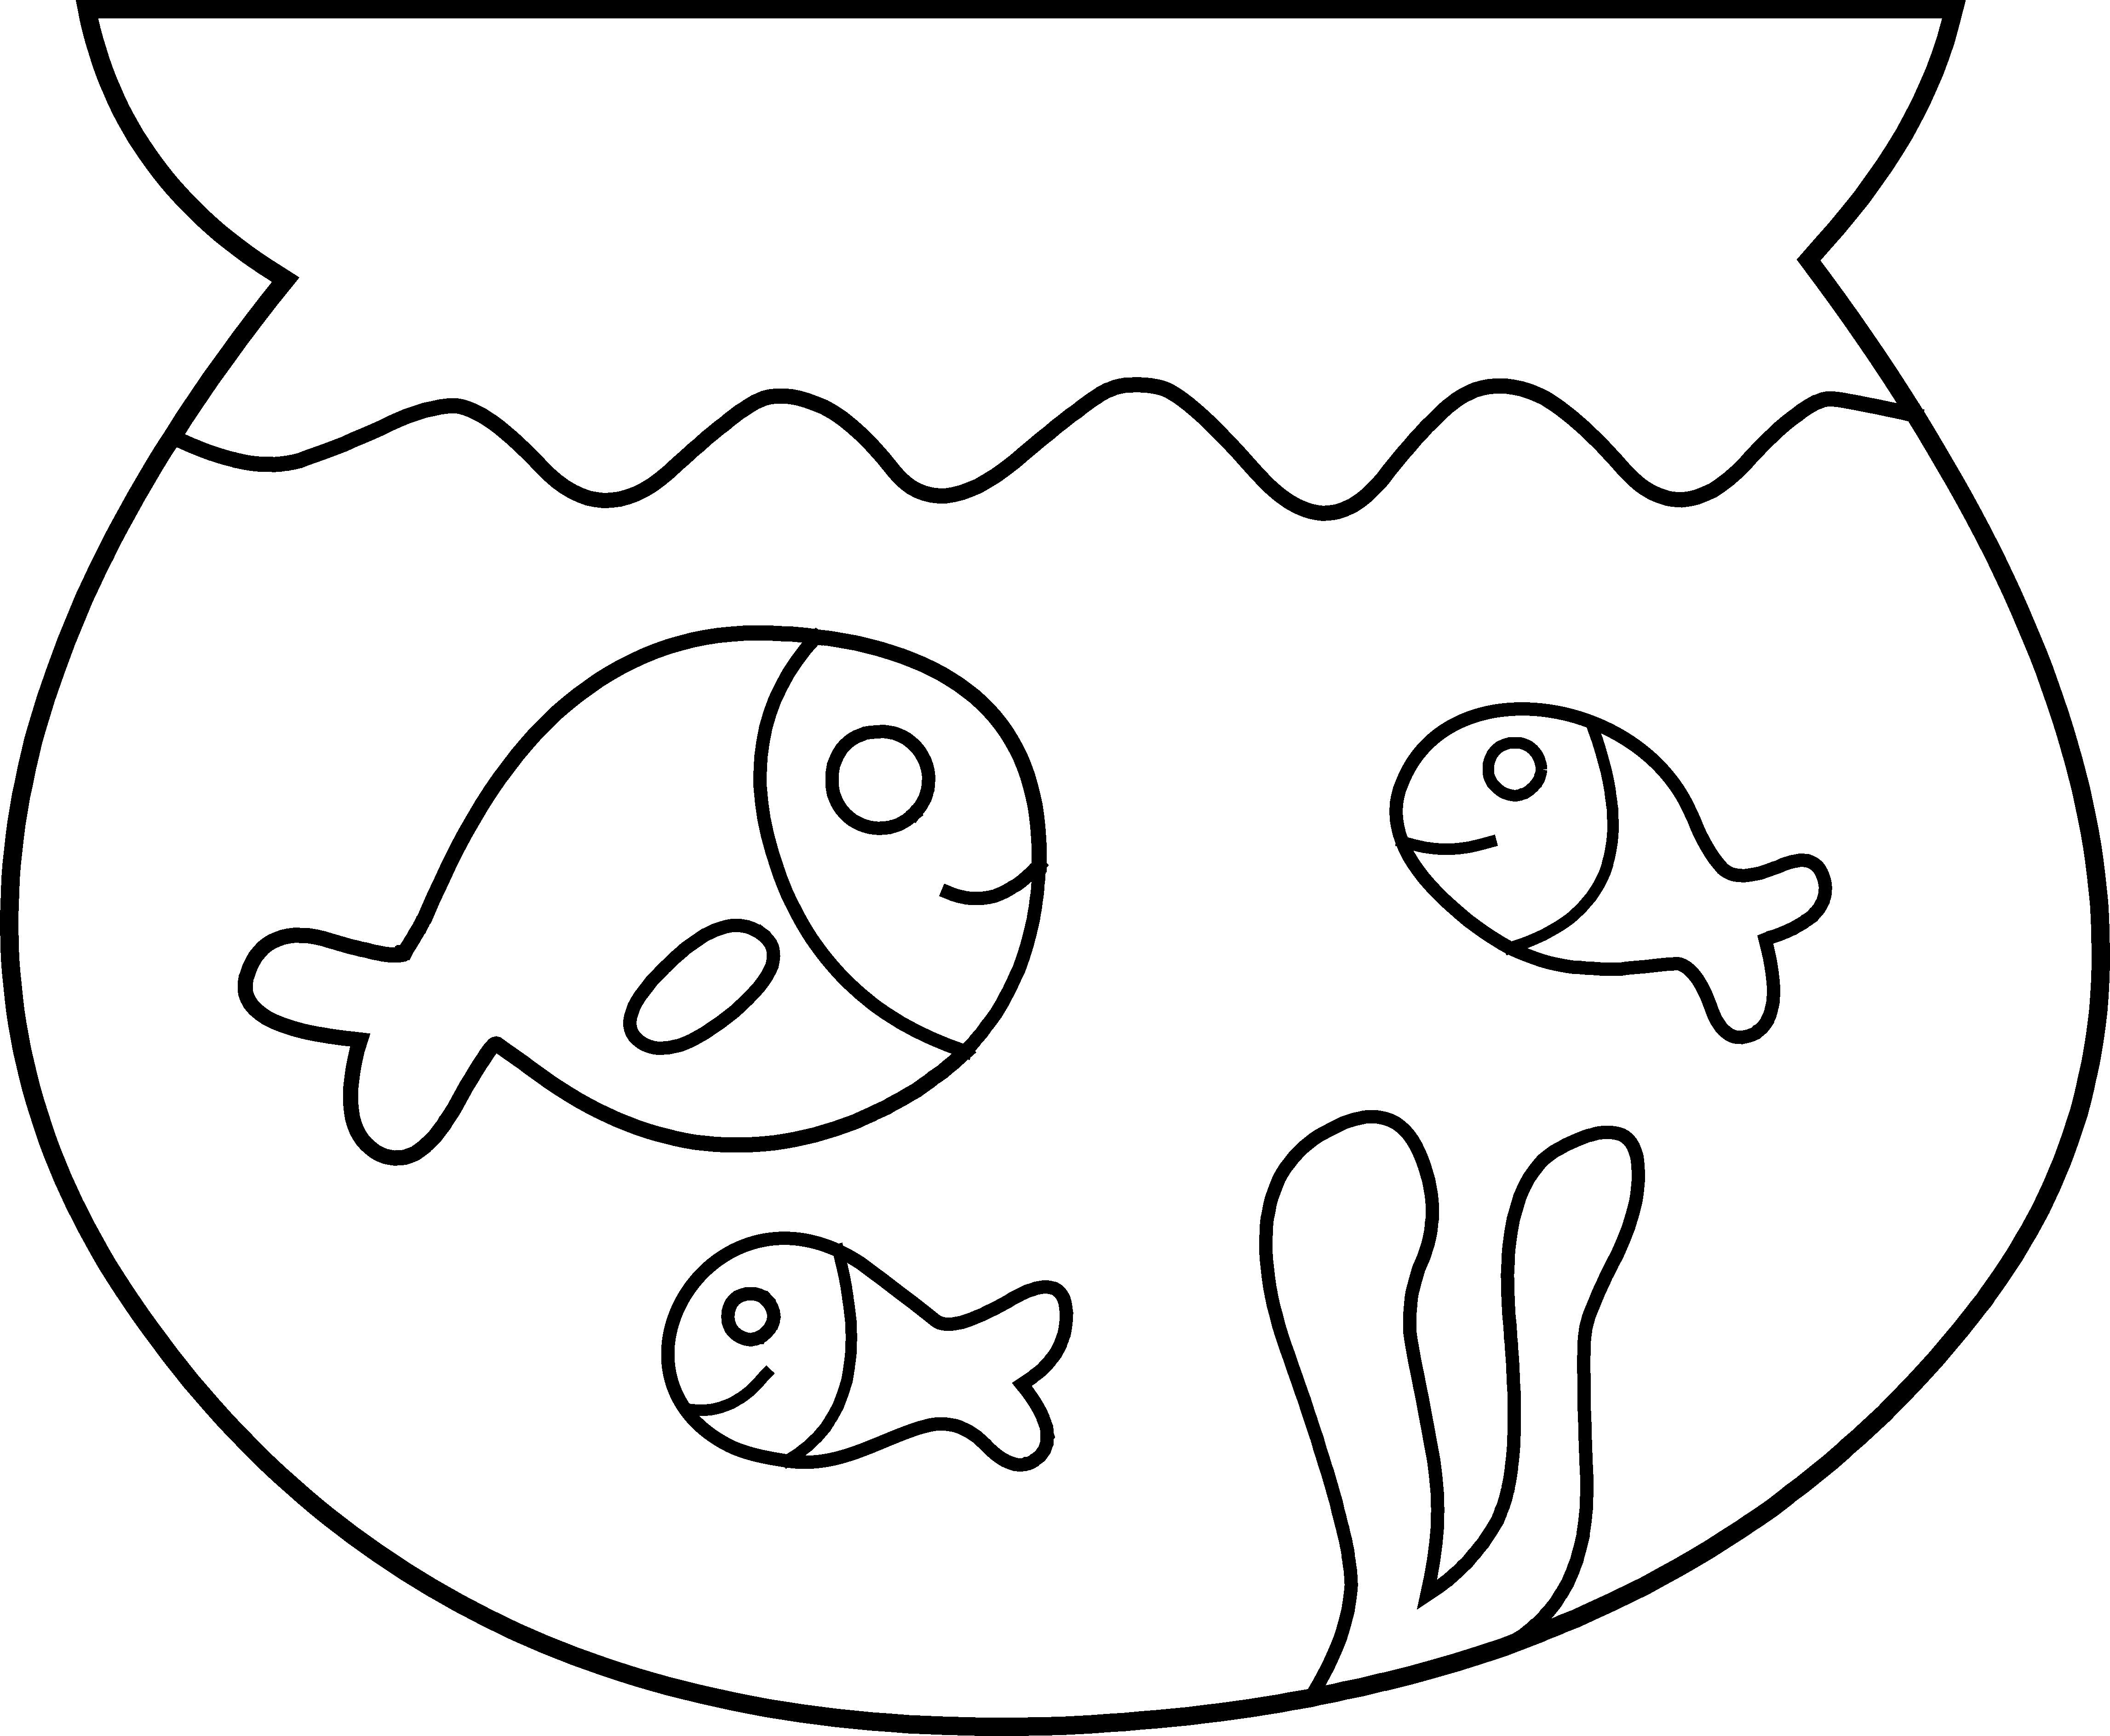 Cute fish clip art. Rosh hashanah clipart black and white